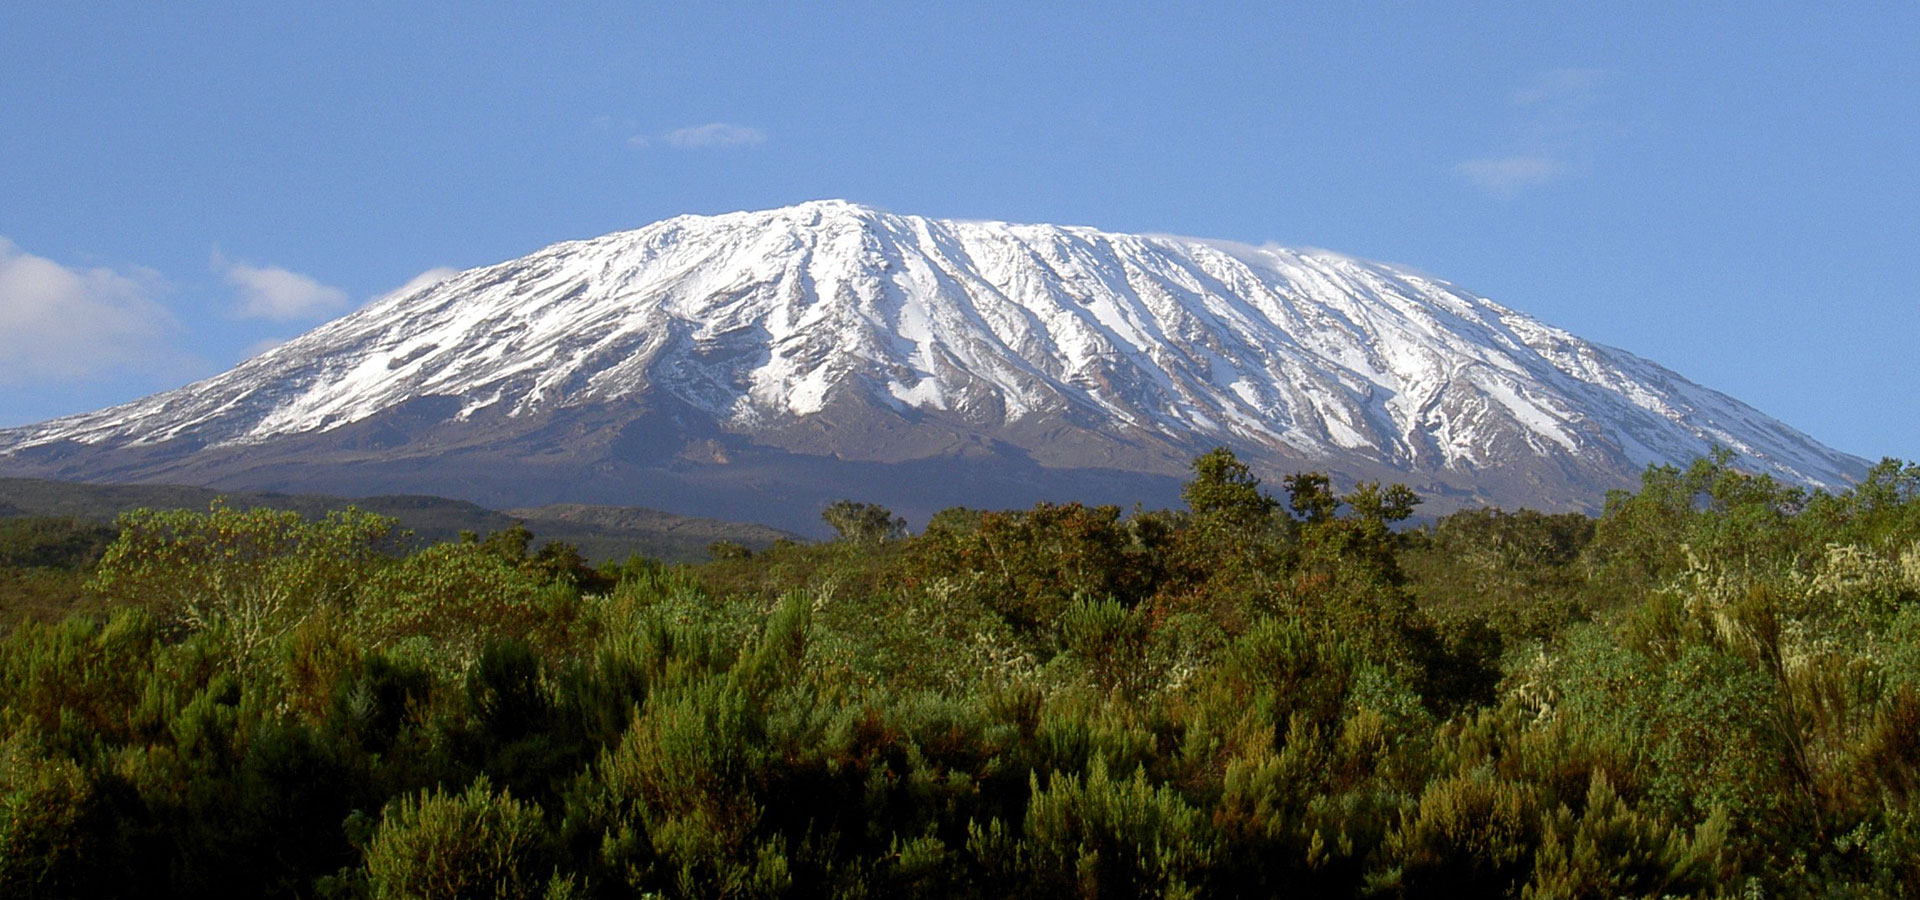 Mount Kilimanjaro scenery